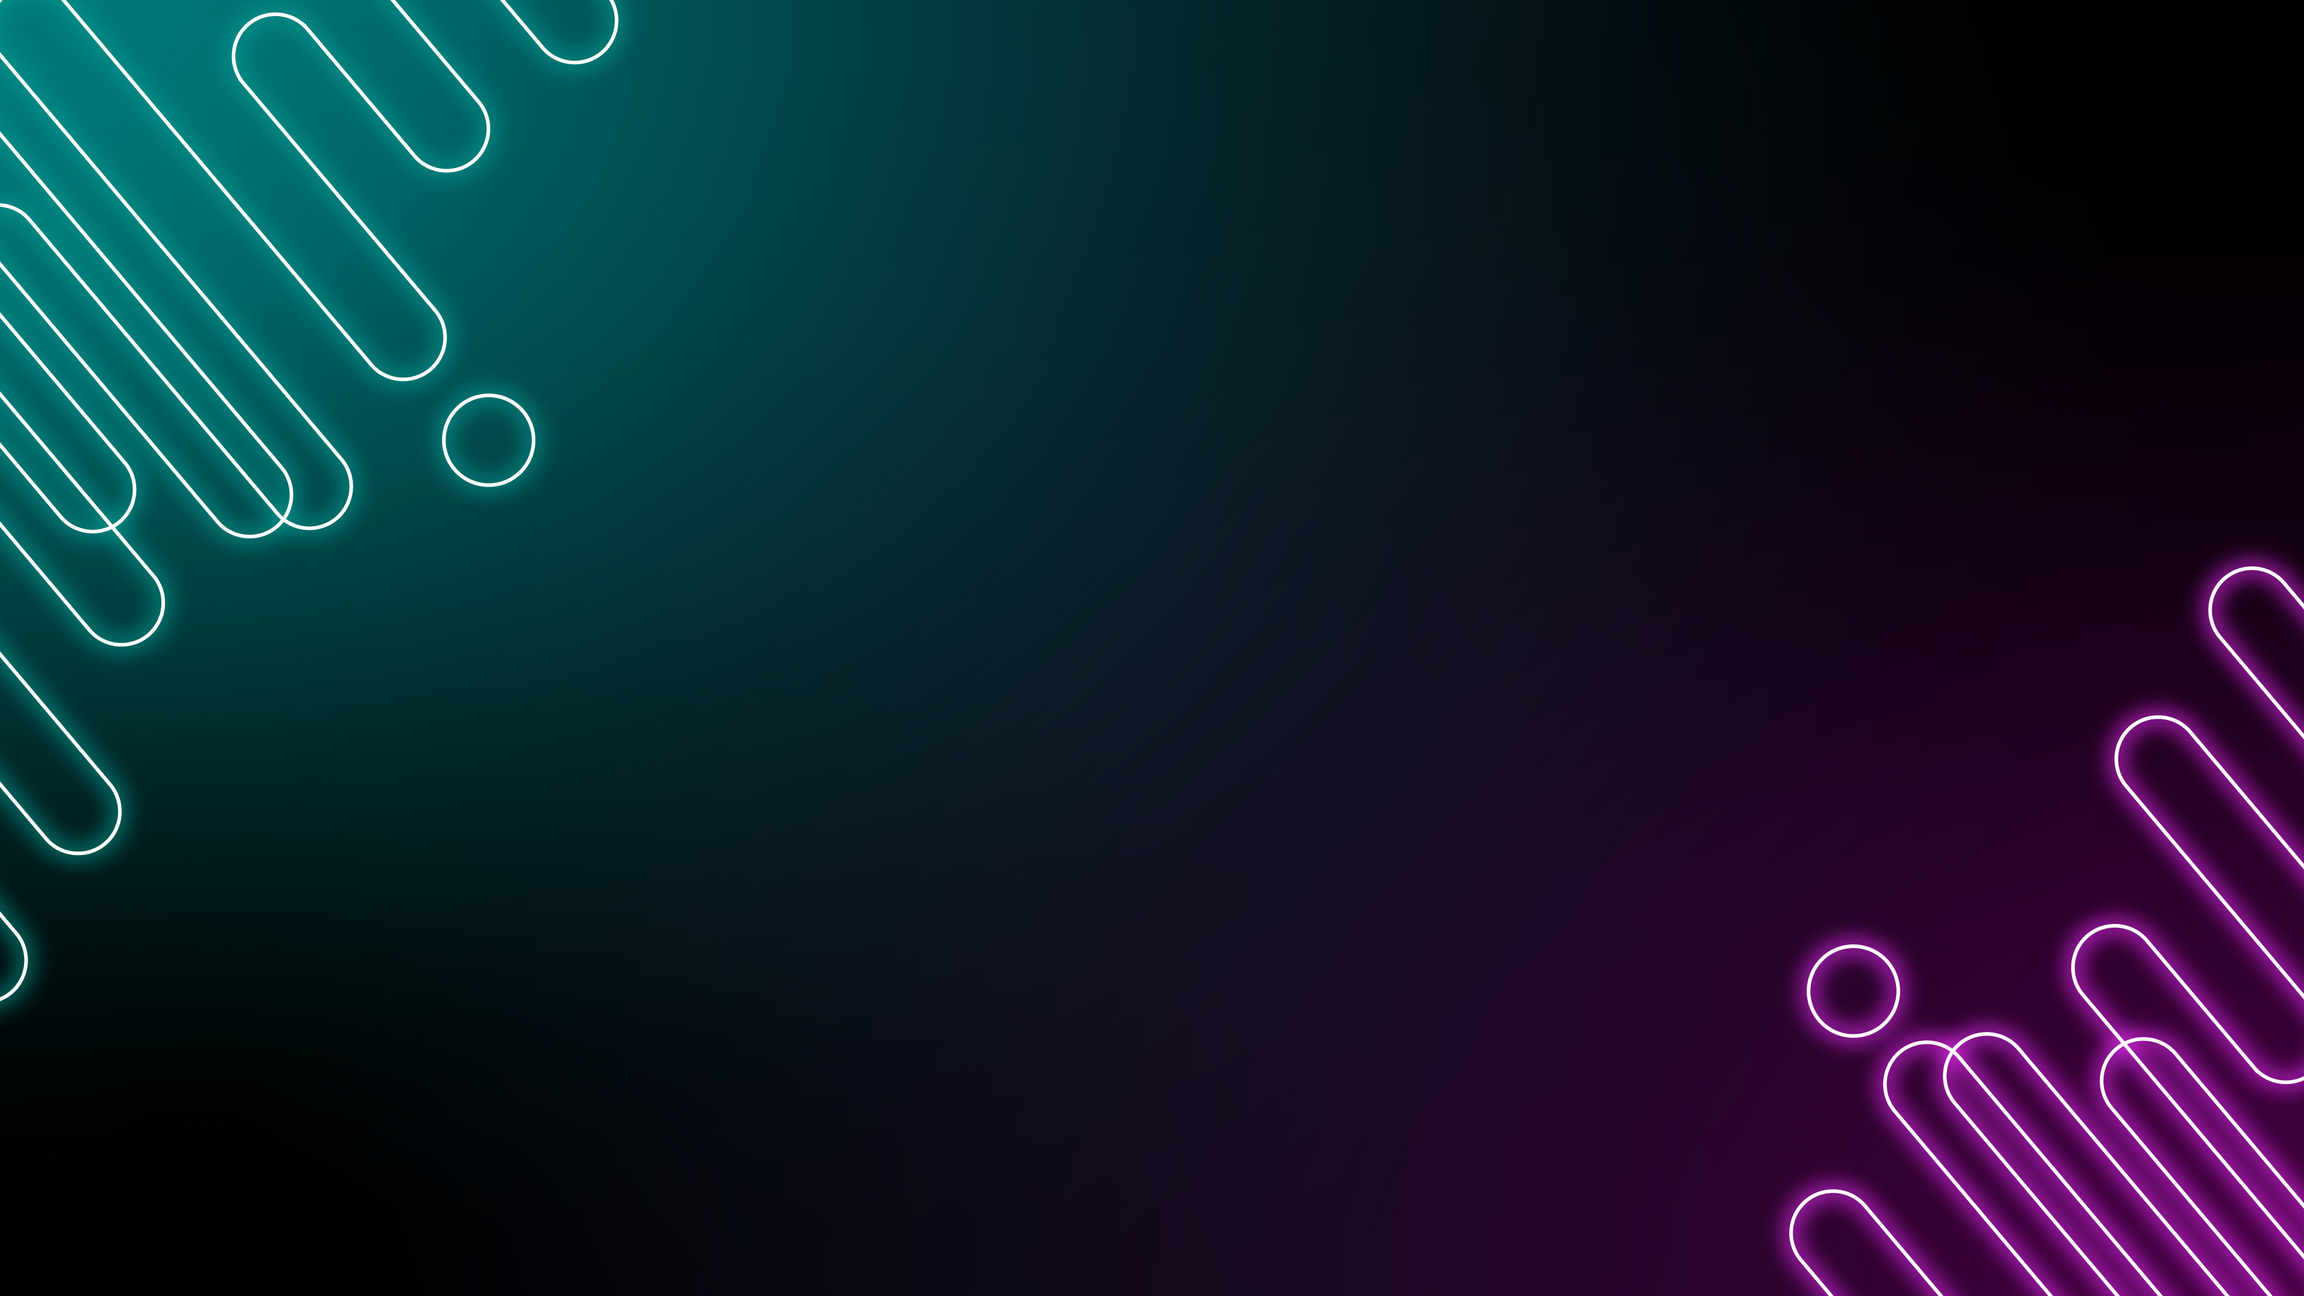 Neon Background 006